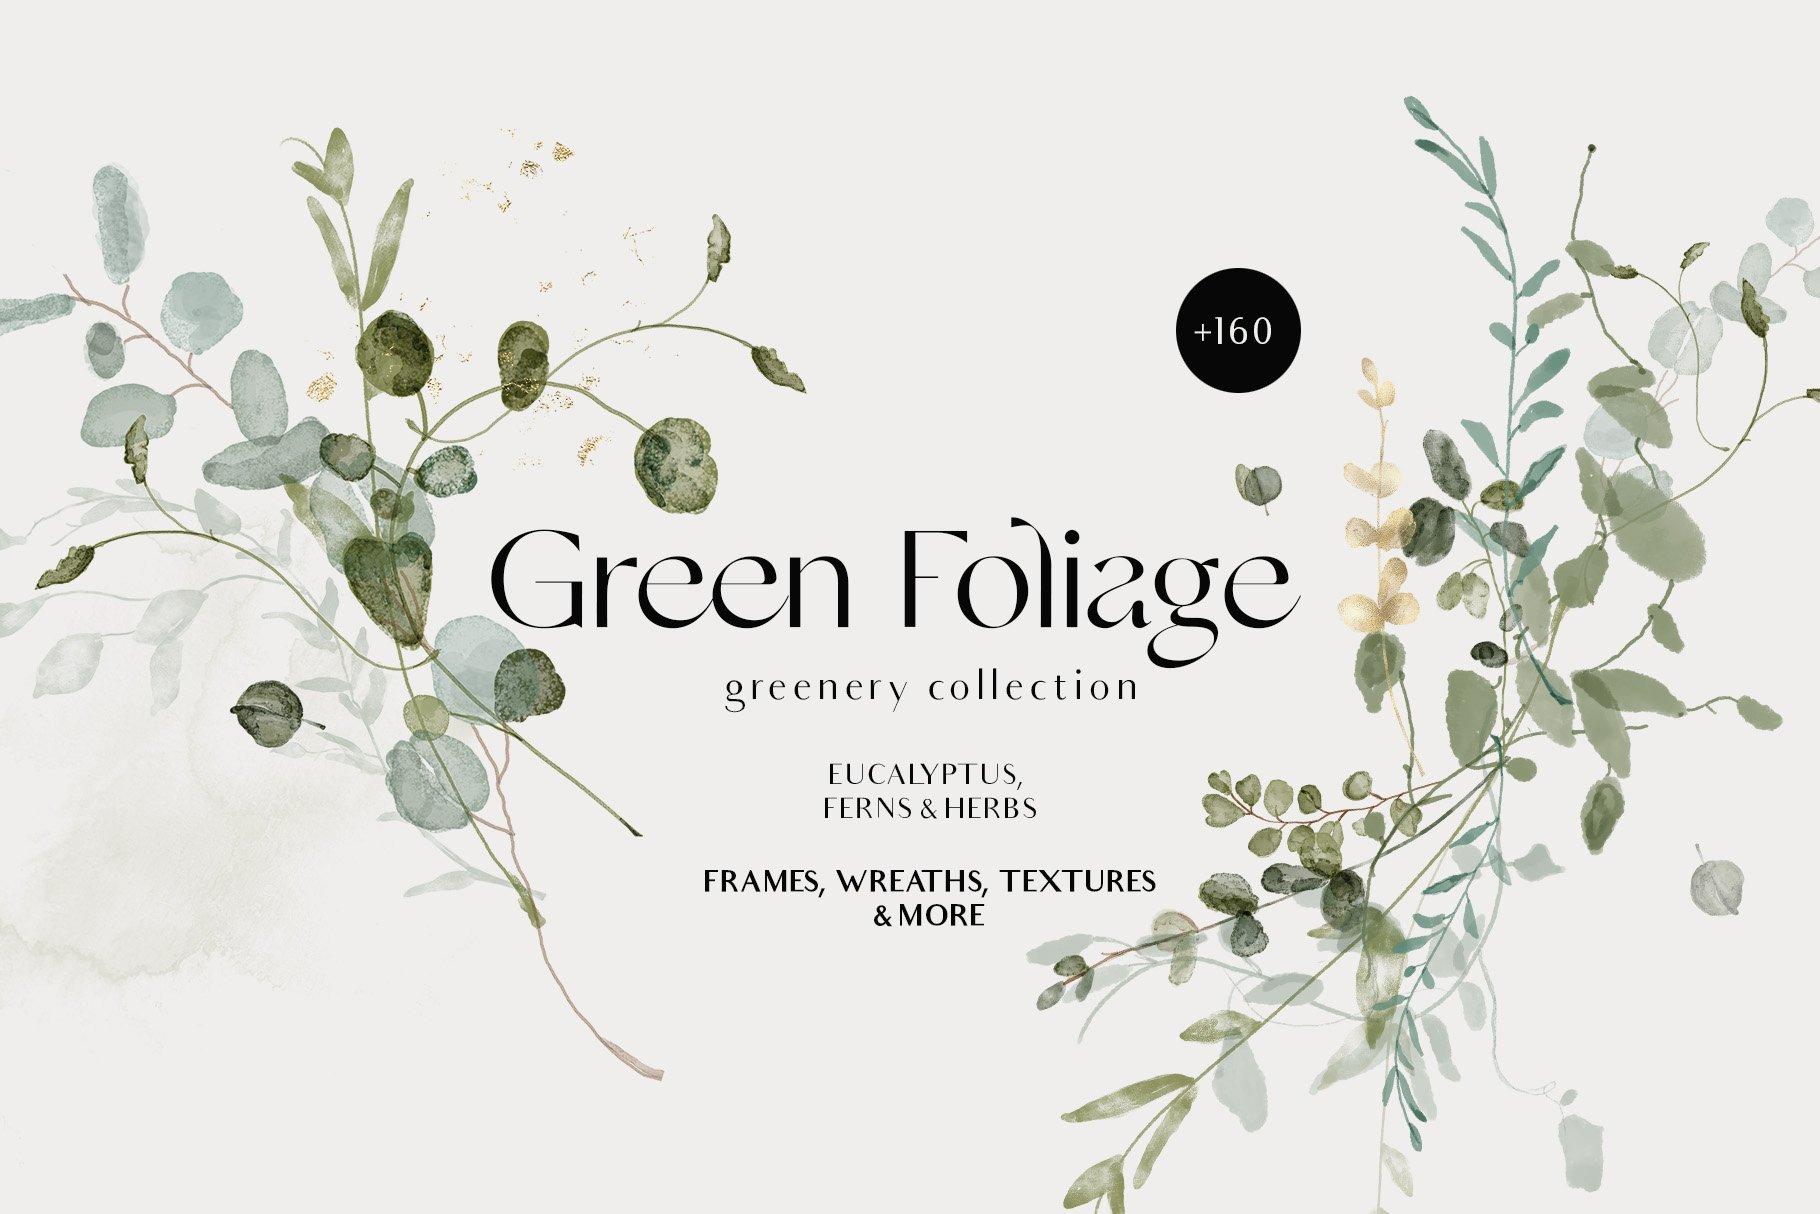 GREEN FOLIAGE - greenery & gold set cover image.